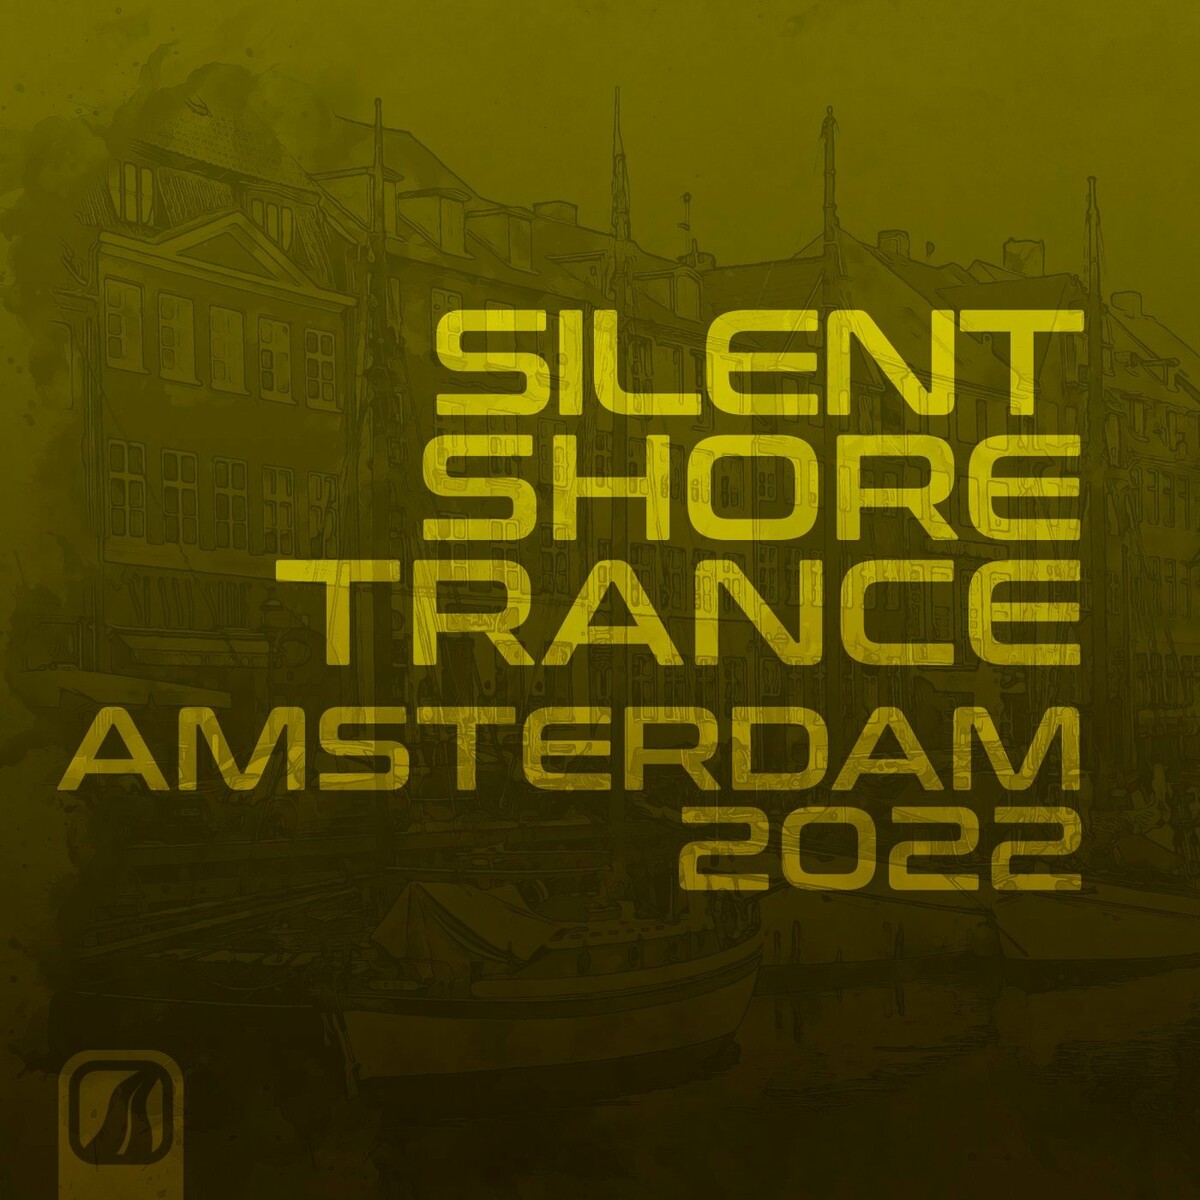 VA - Silent Shore Trance - Amsterdam